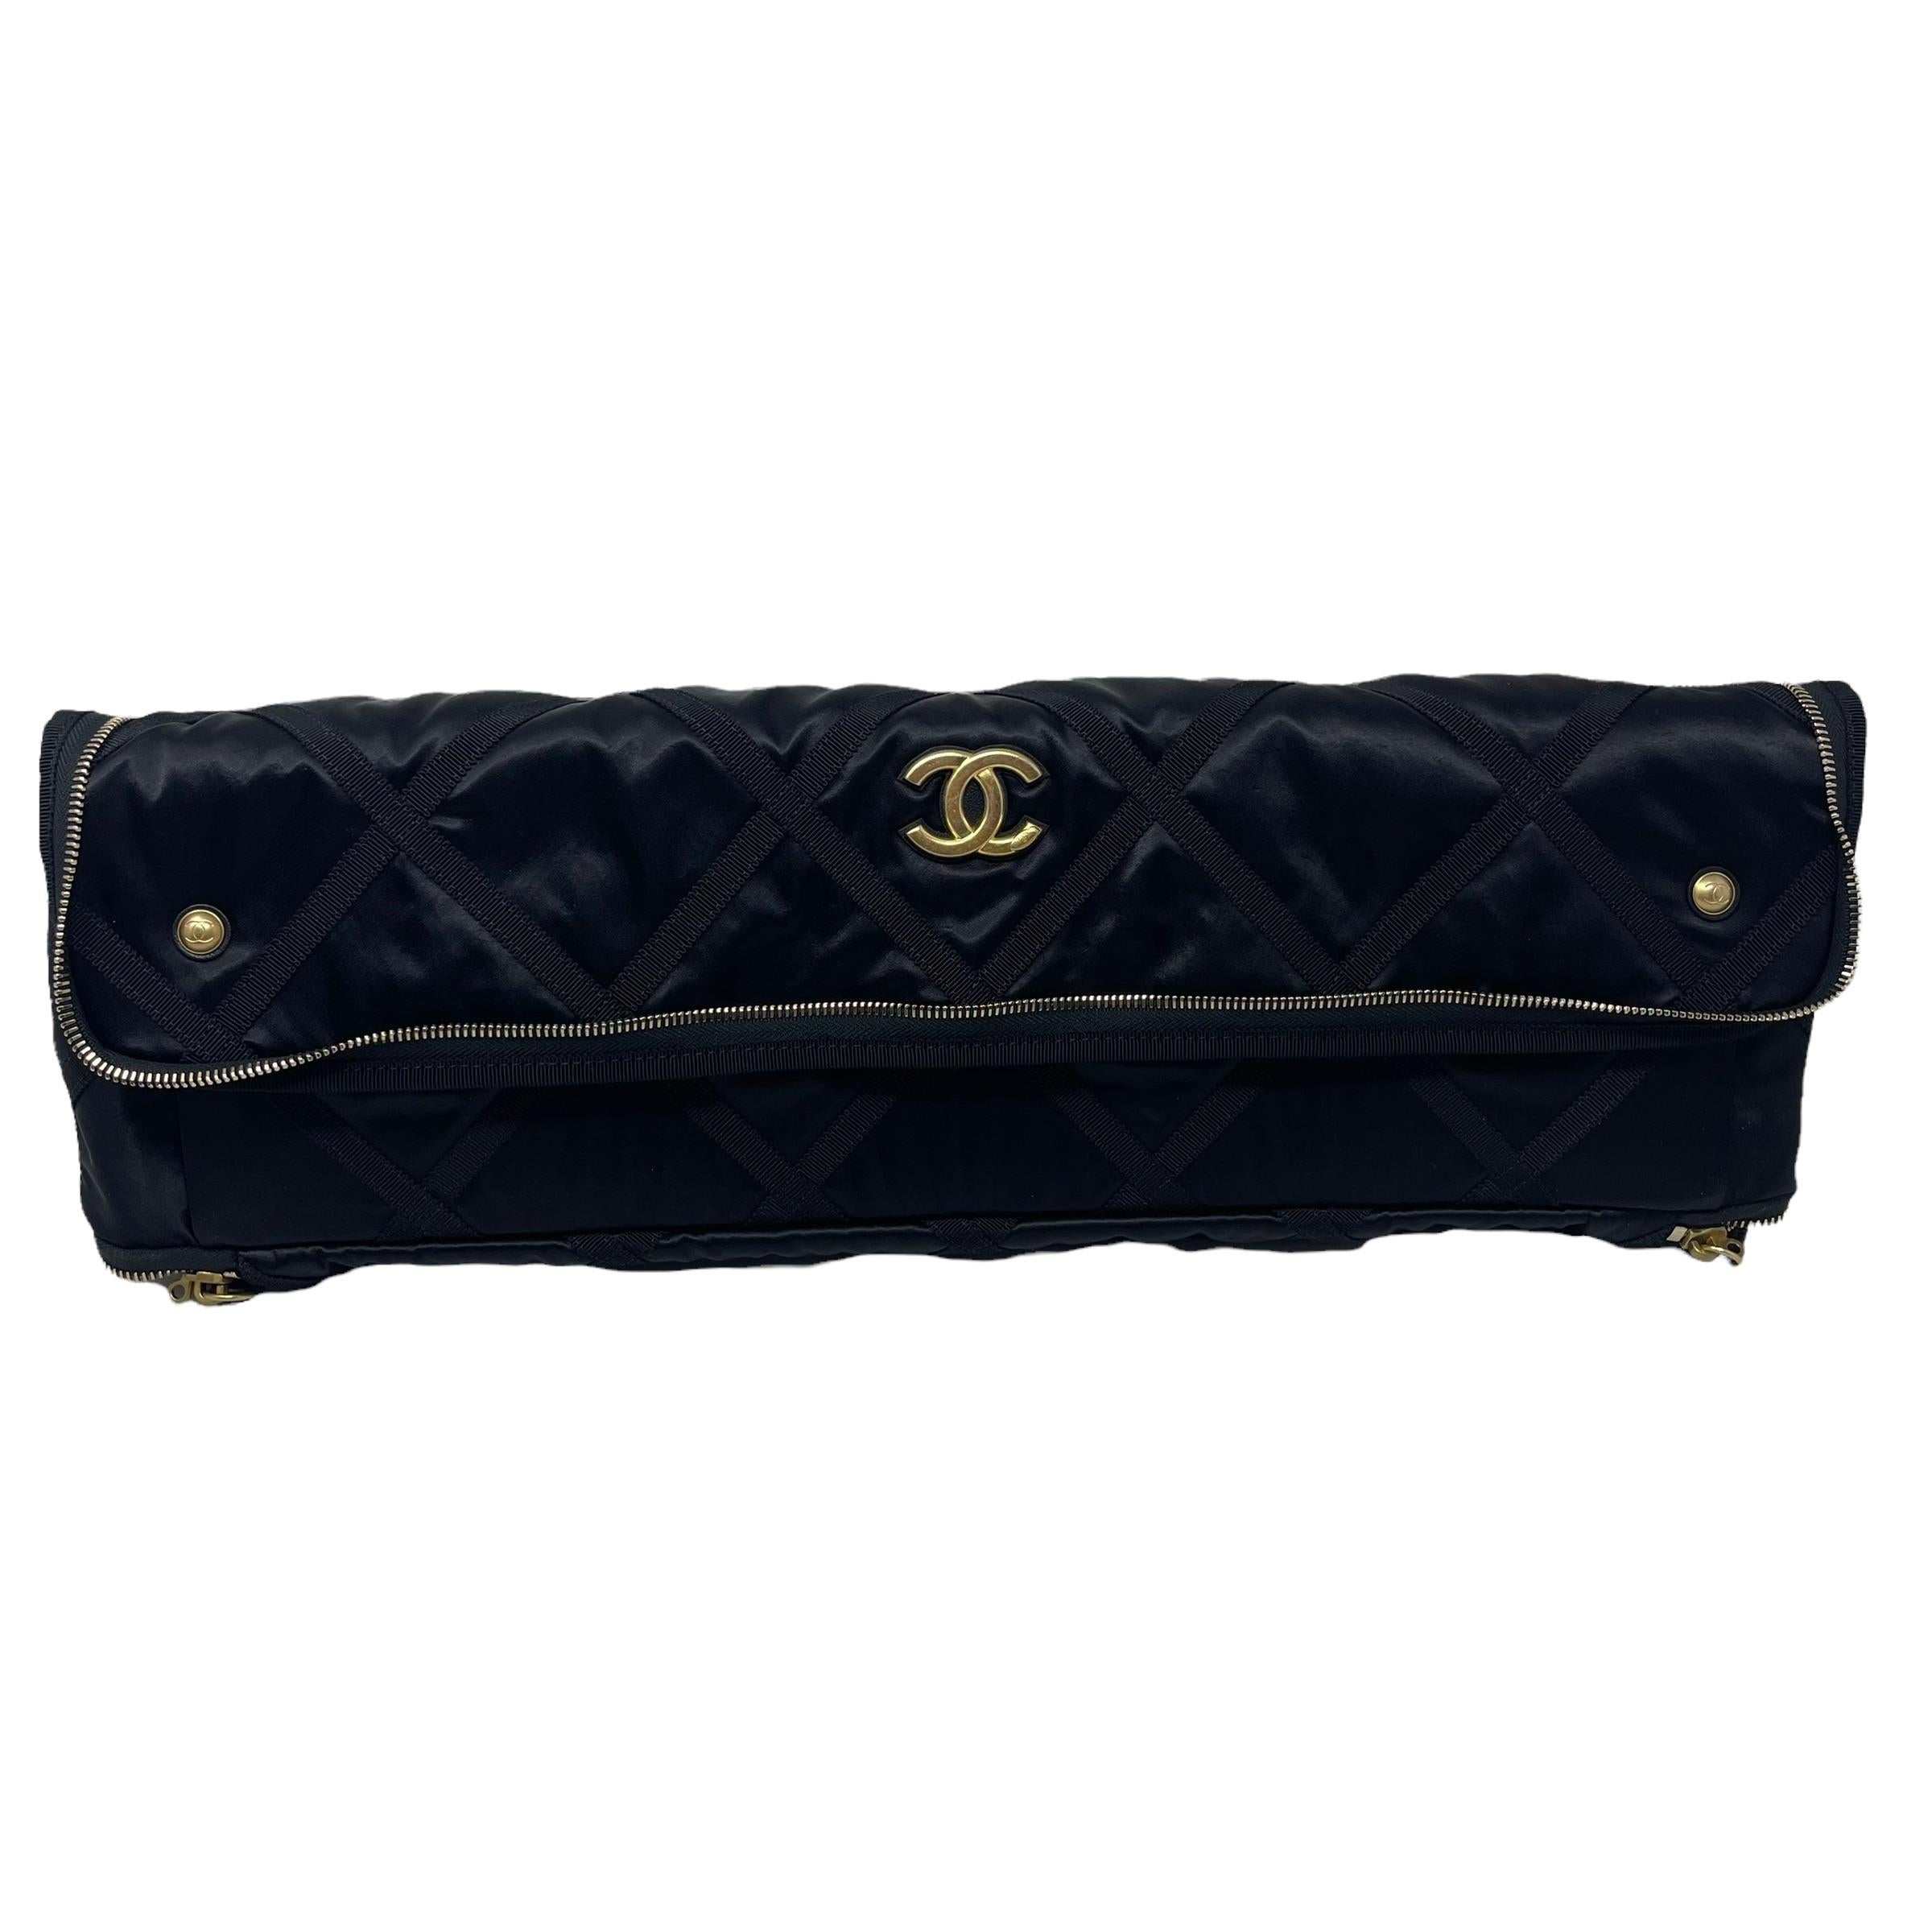 NEW Chanel Black Nylon Large Travel Bag Gold-Tone Hardware Tote Duffle Bag 2022 For Sale 3